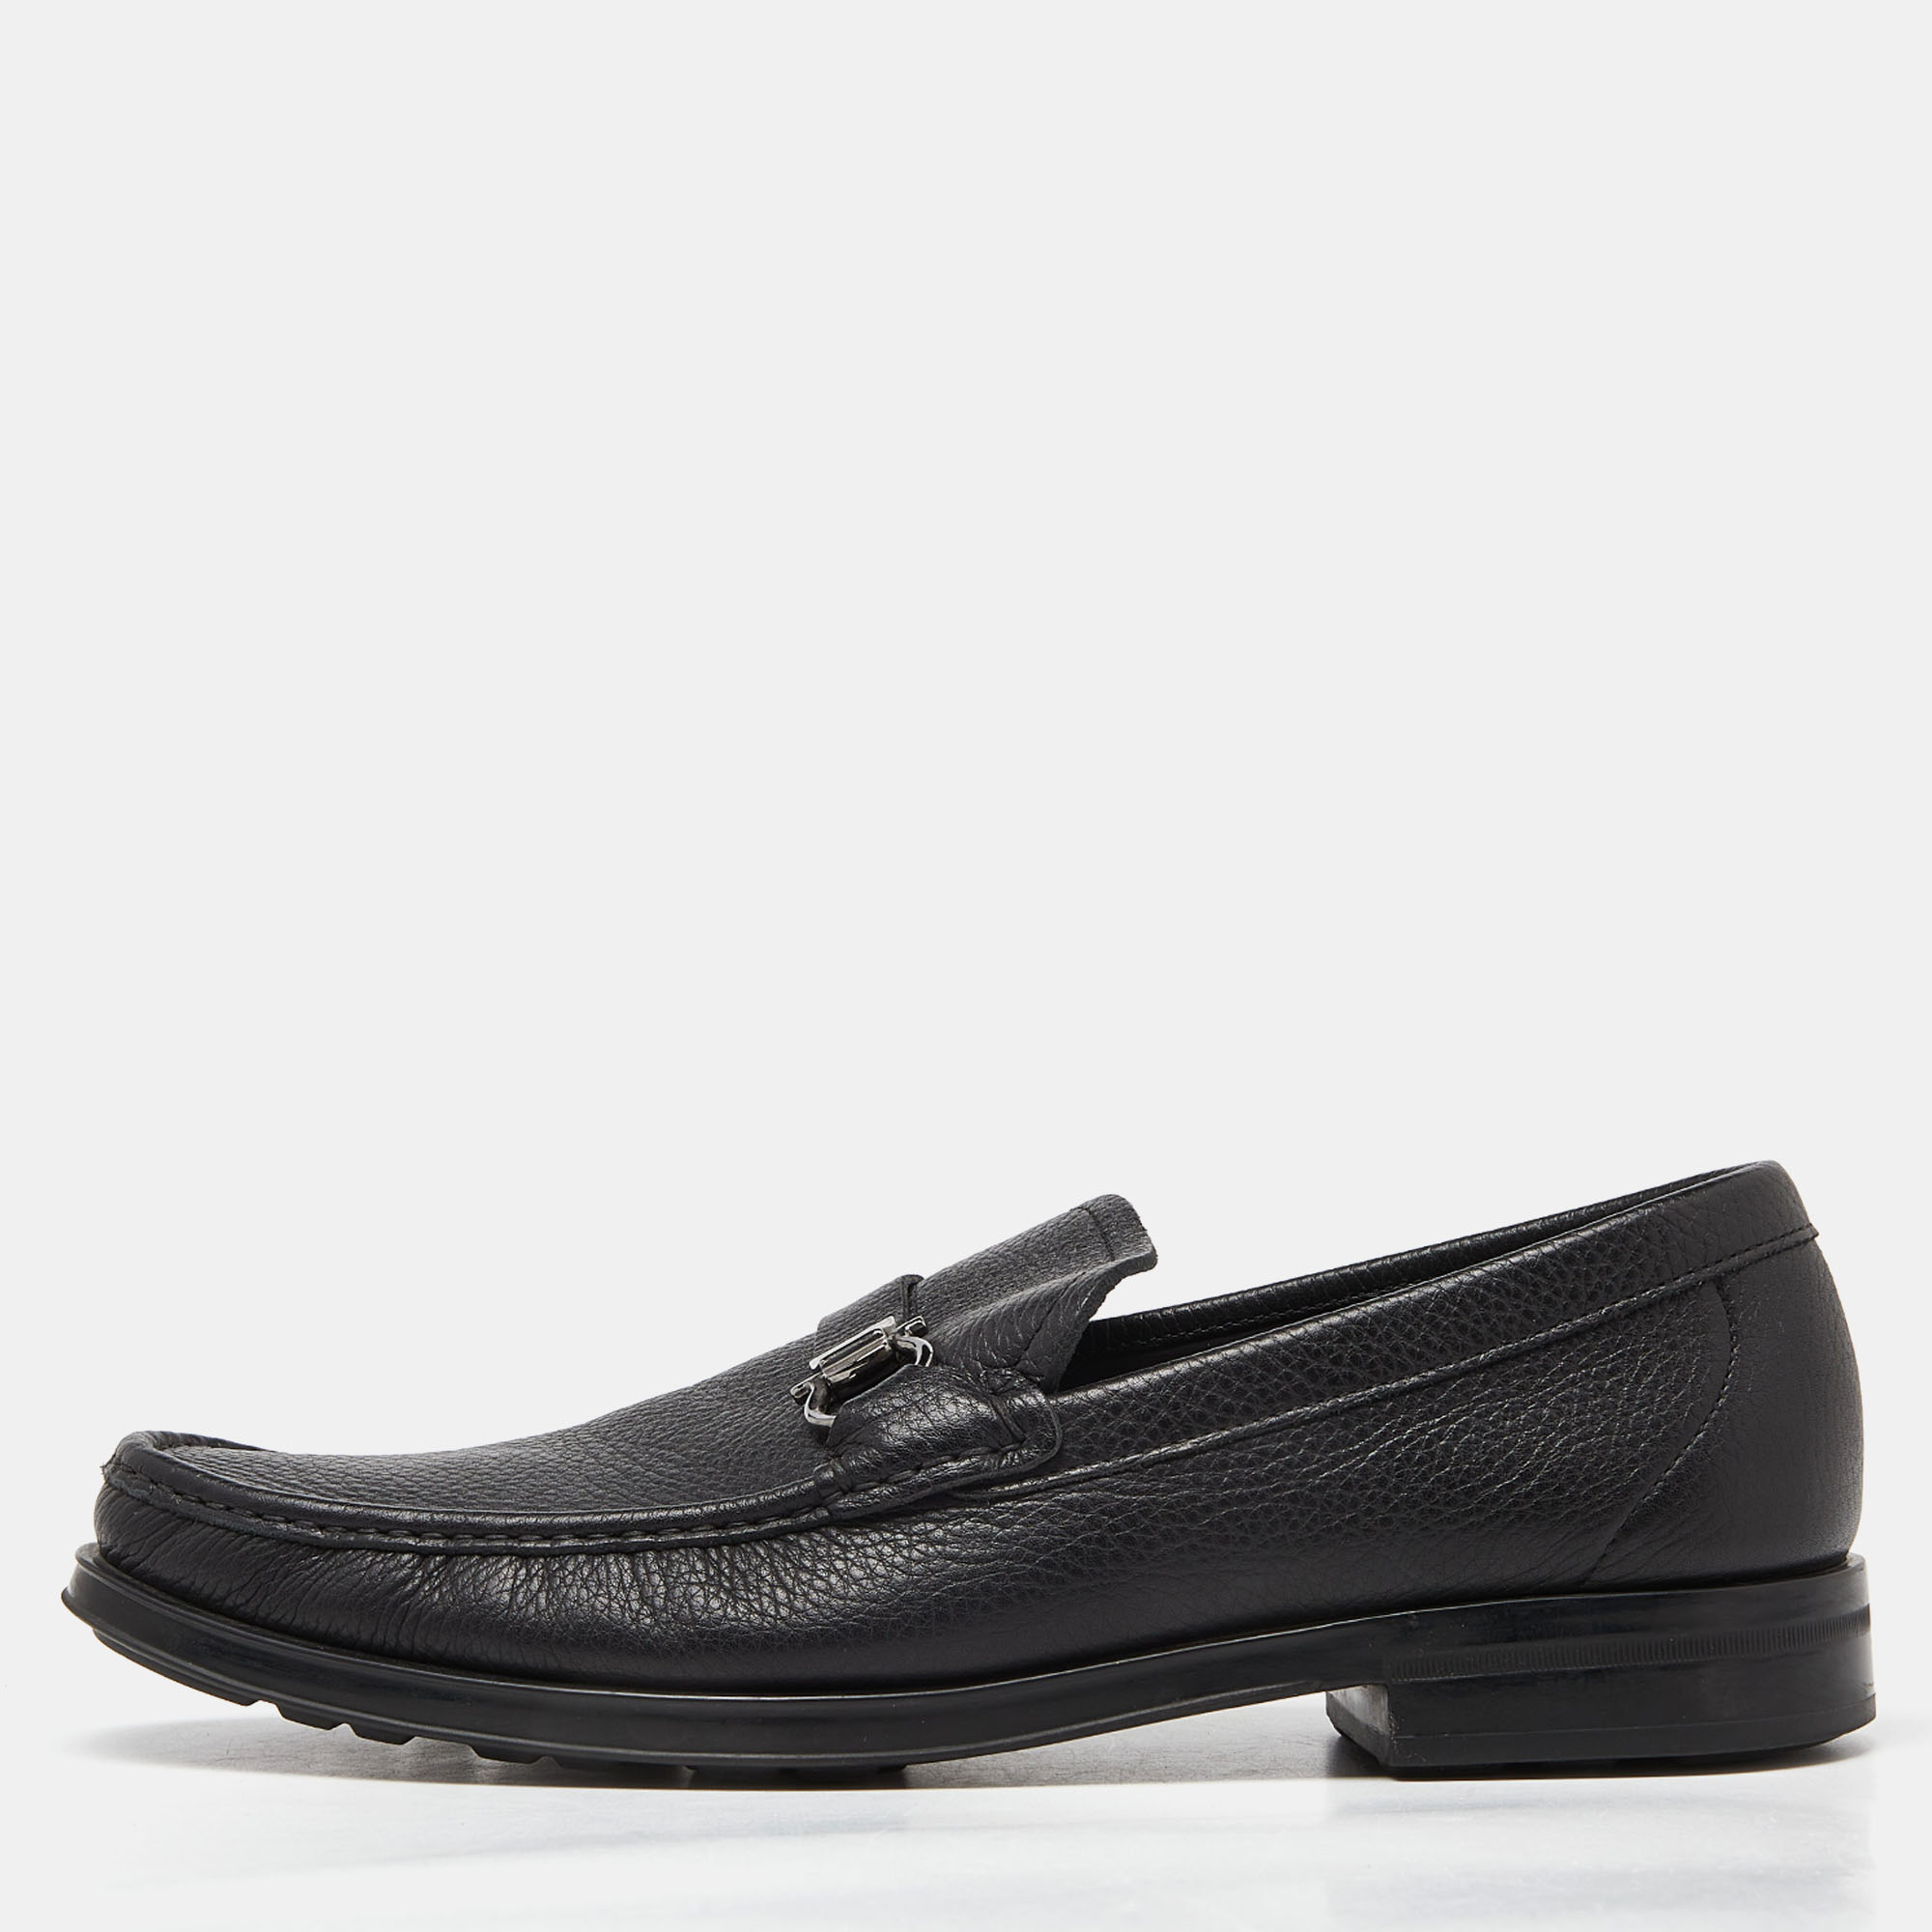 Salvatore ferragamo black leather gancini bit loafers size 44.5